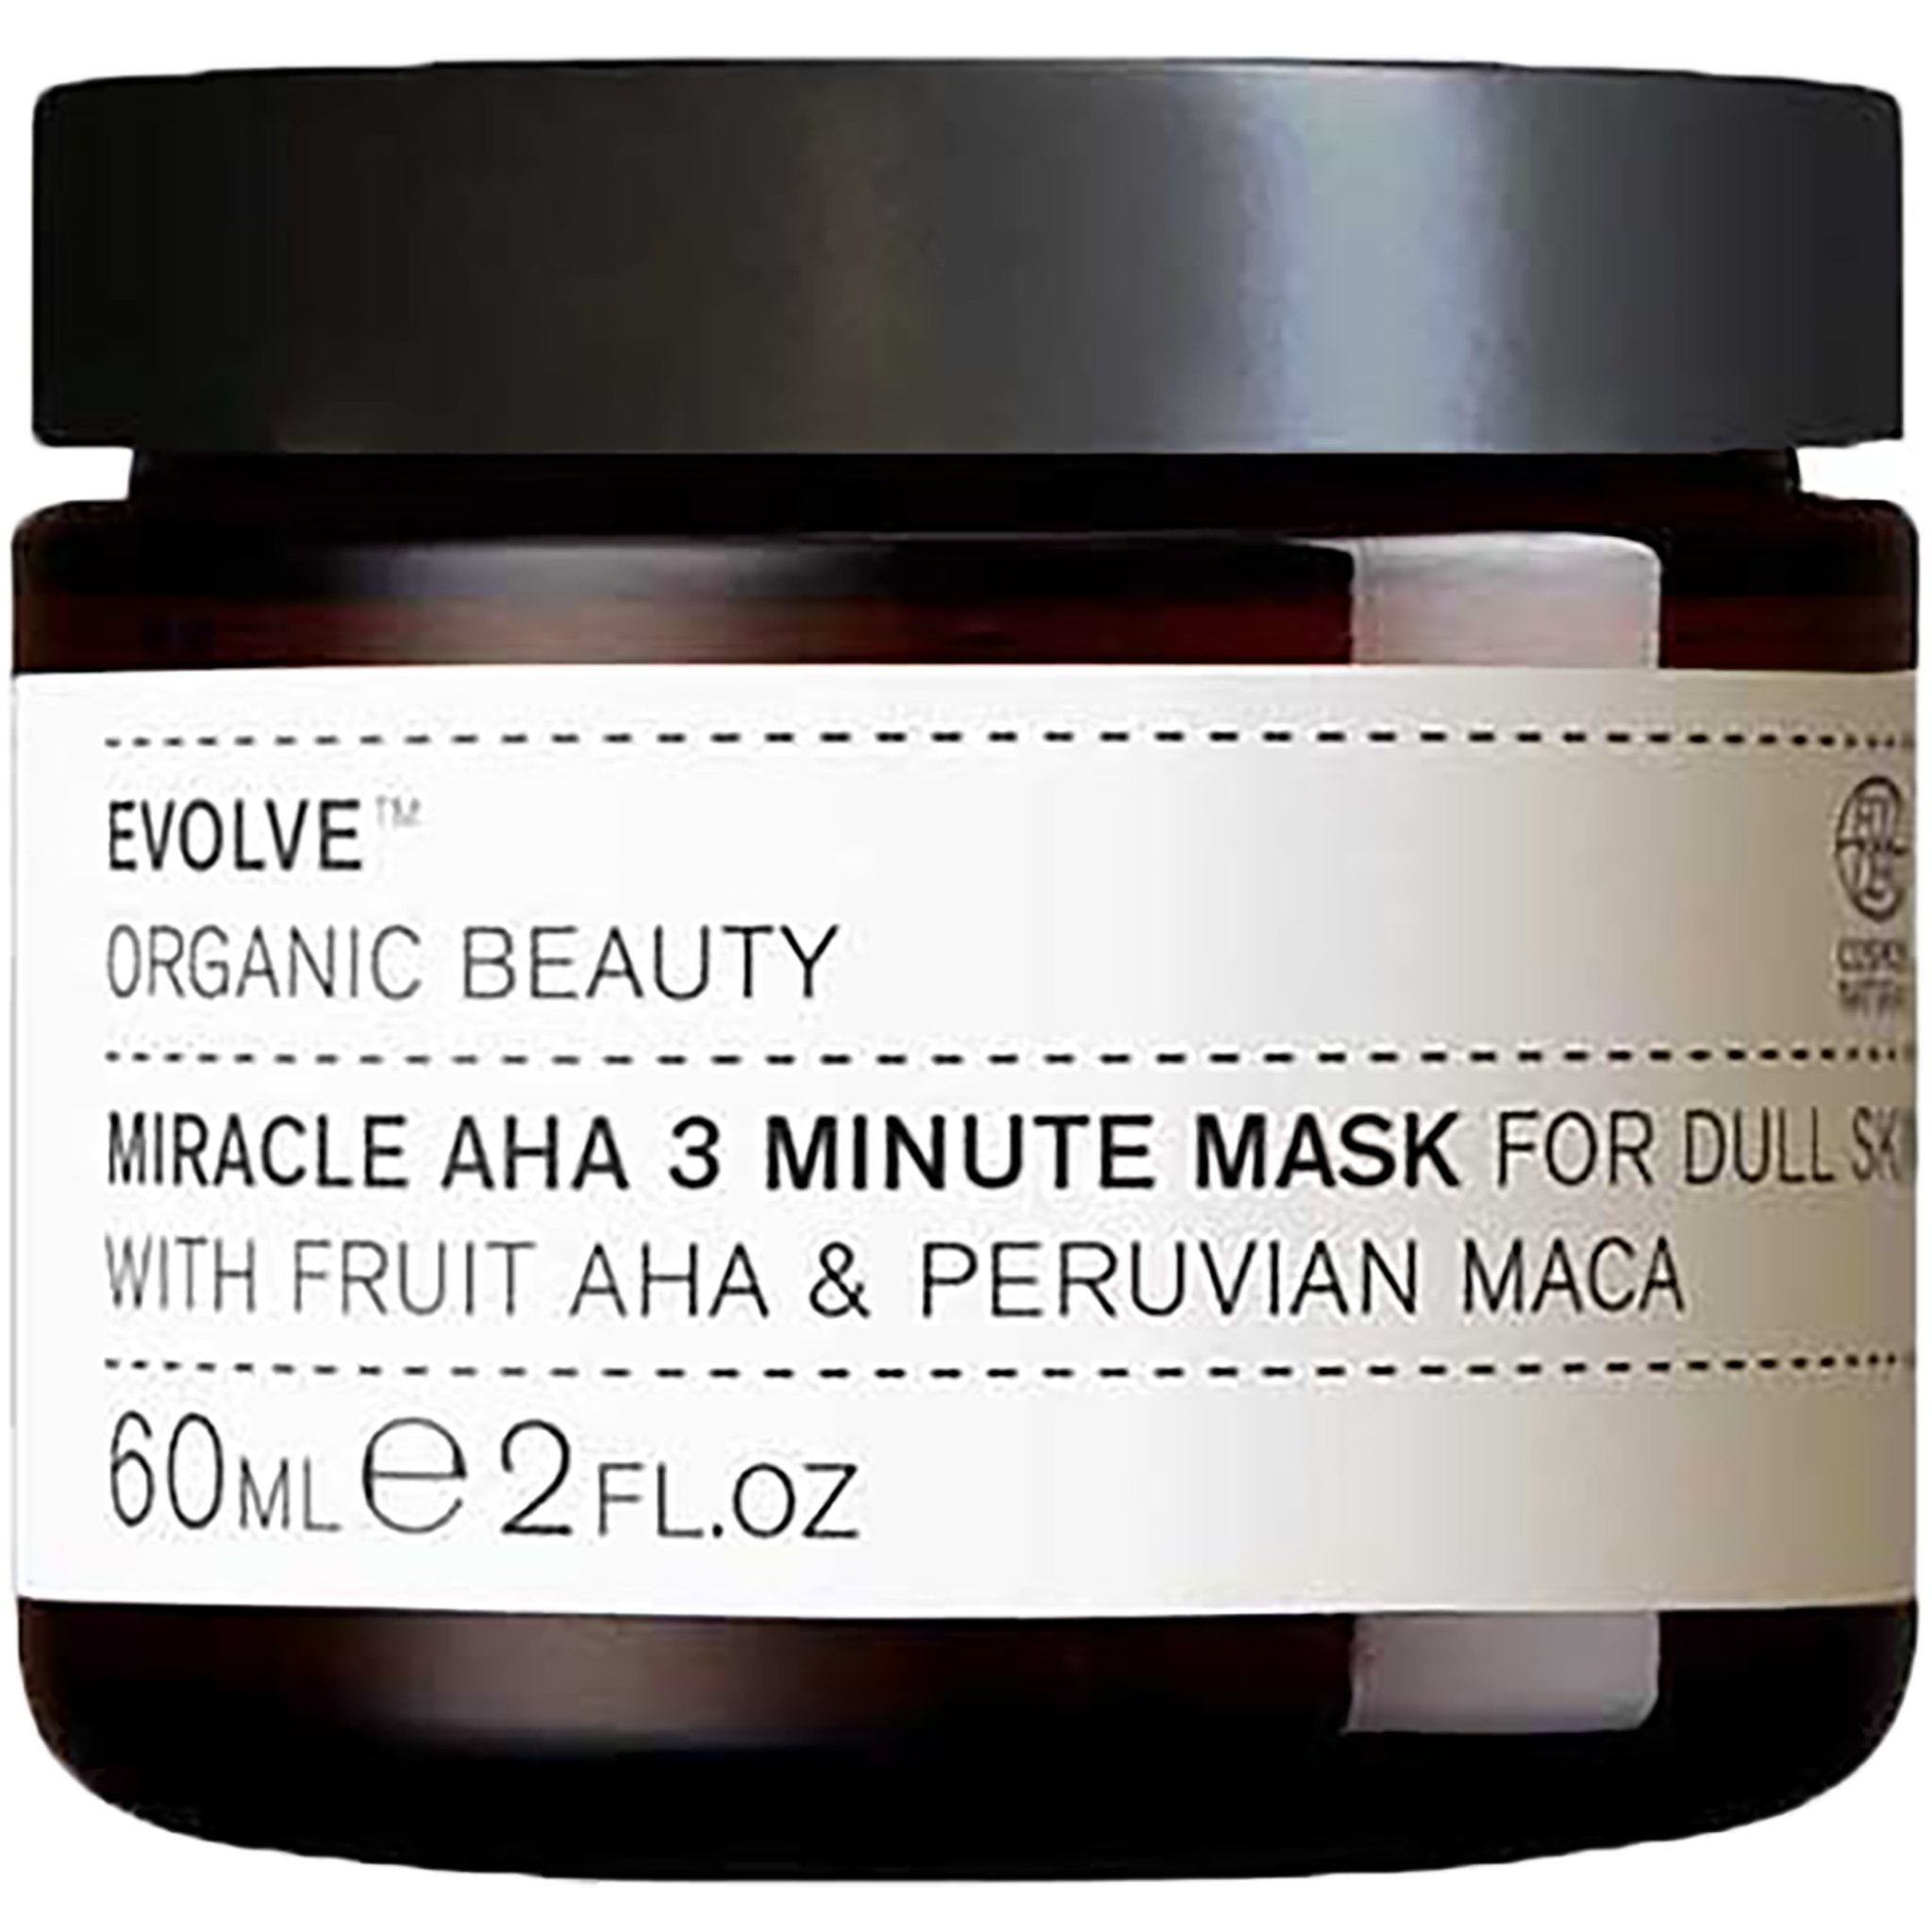 Miracle AHA 3 Minute Mask - mypure.co.uk